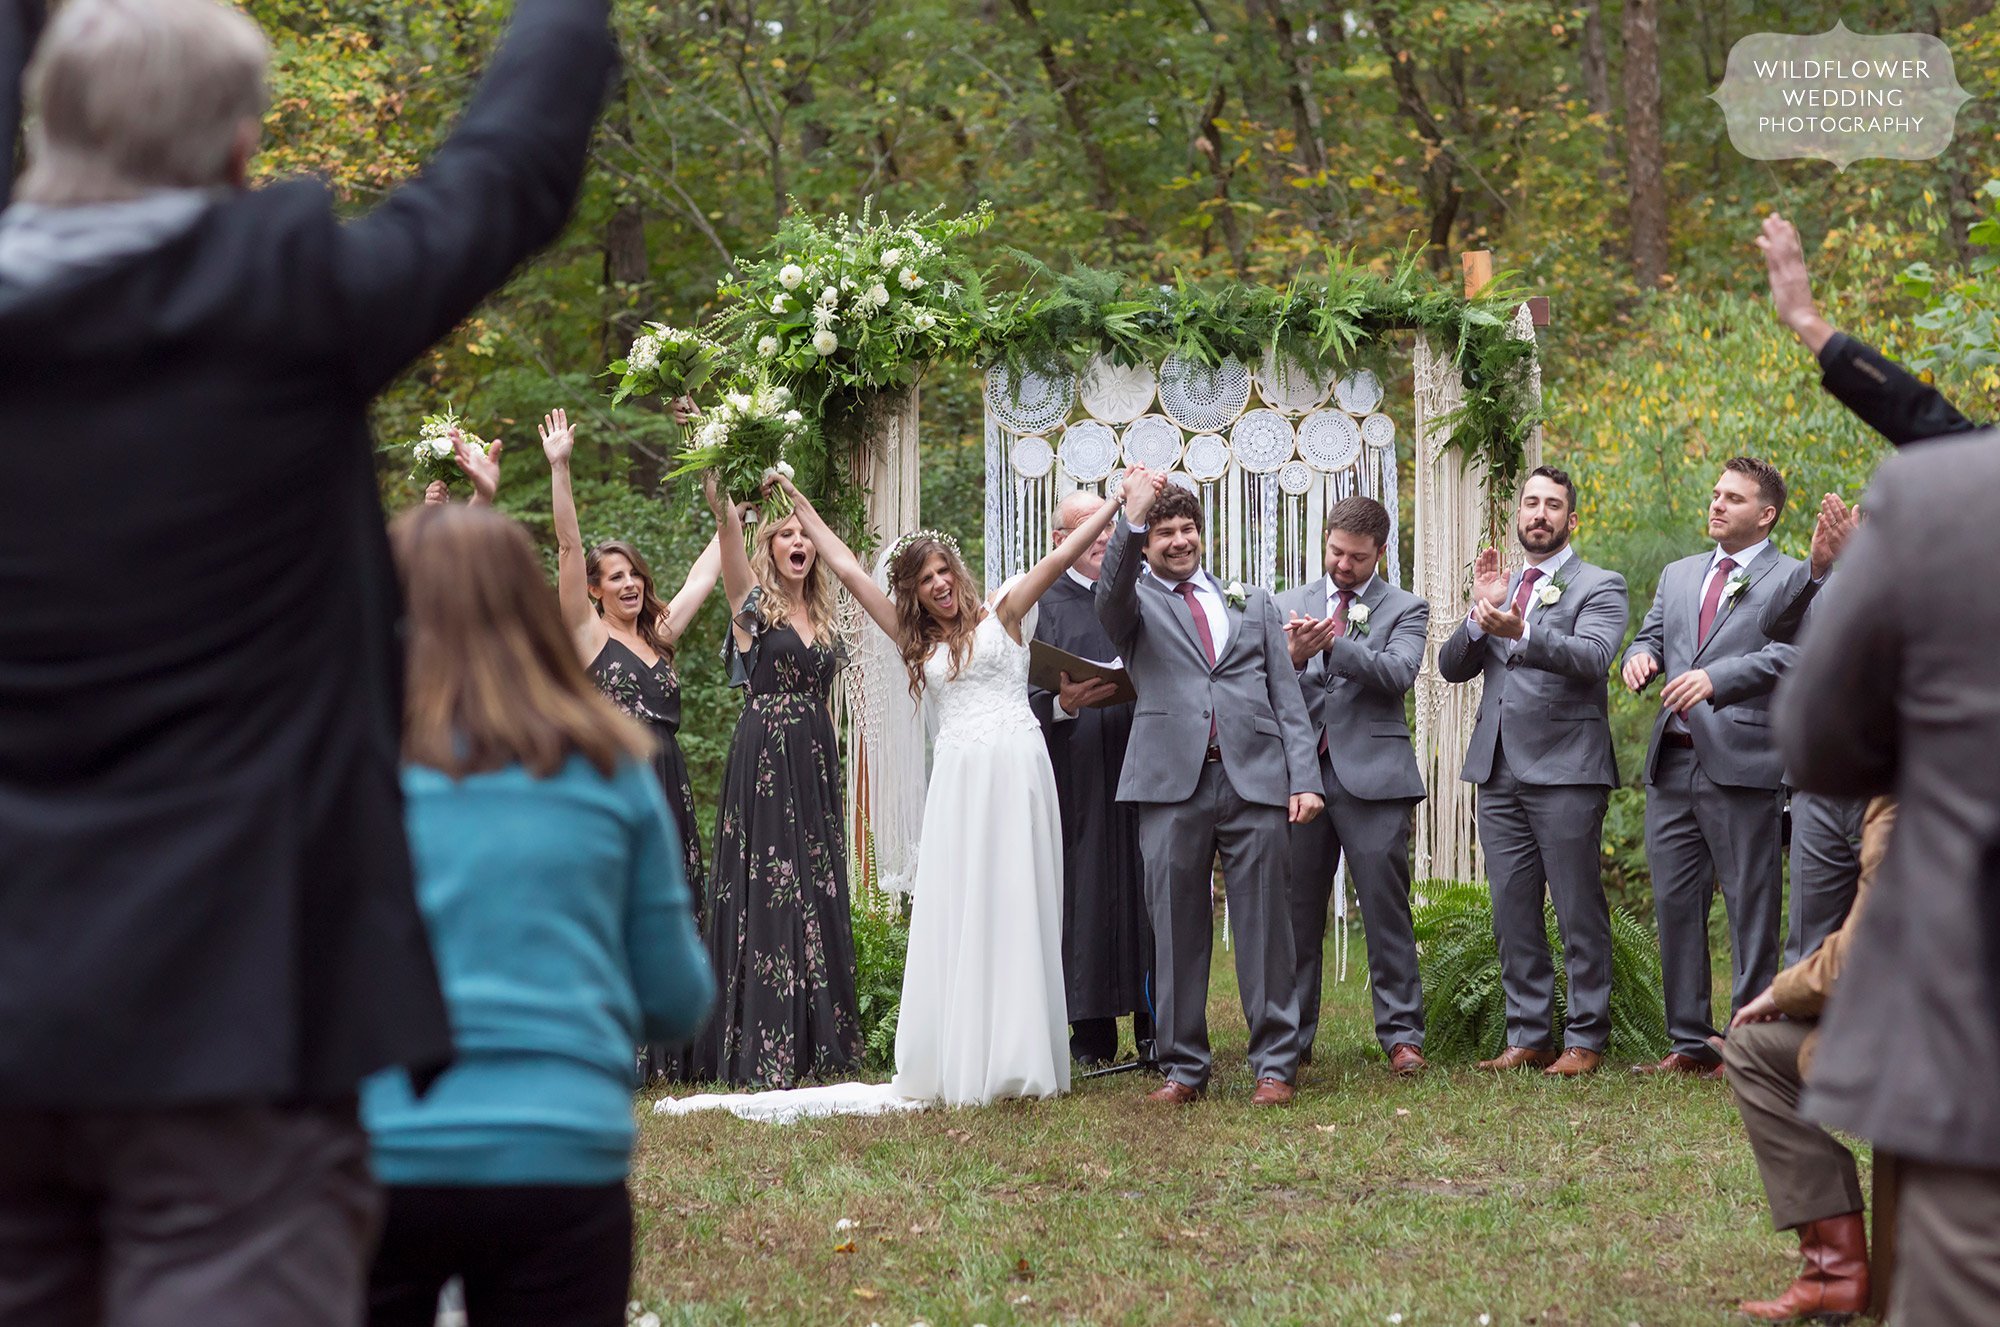 Joyful wedding photo of bride and groom celebrating at Little Piney Lodge.